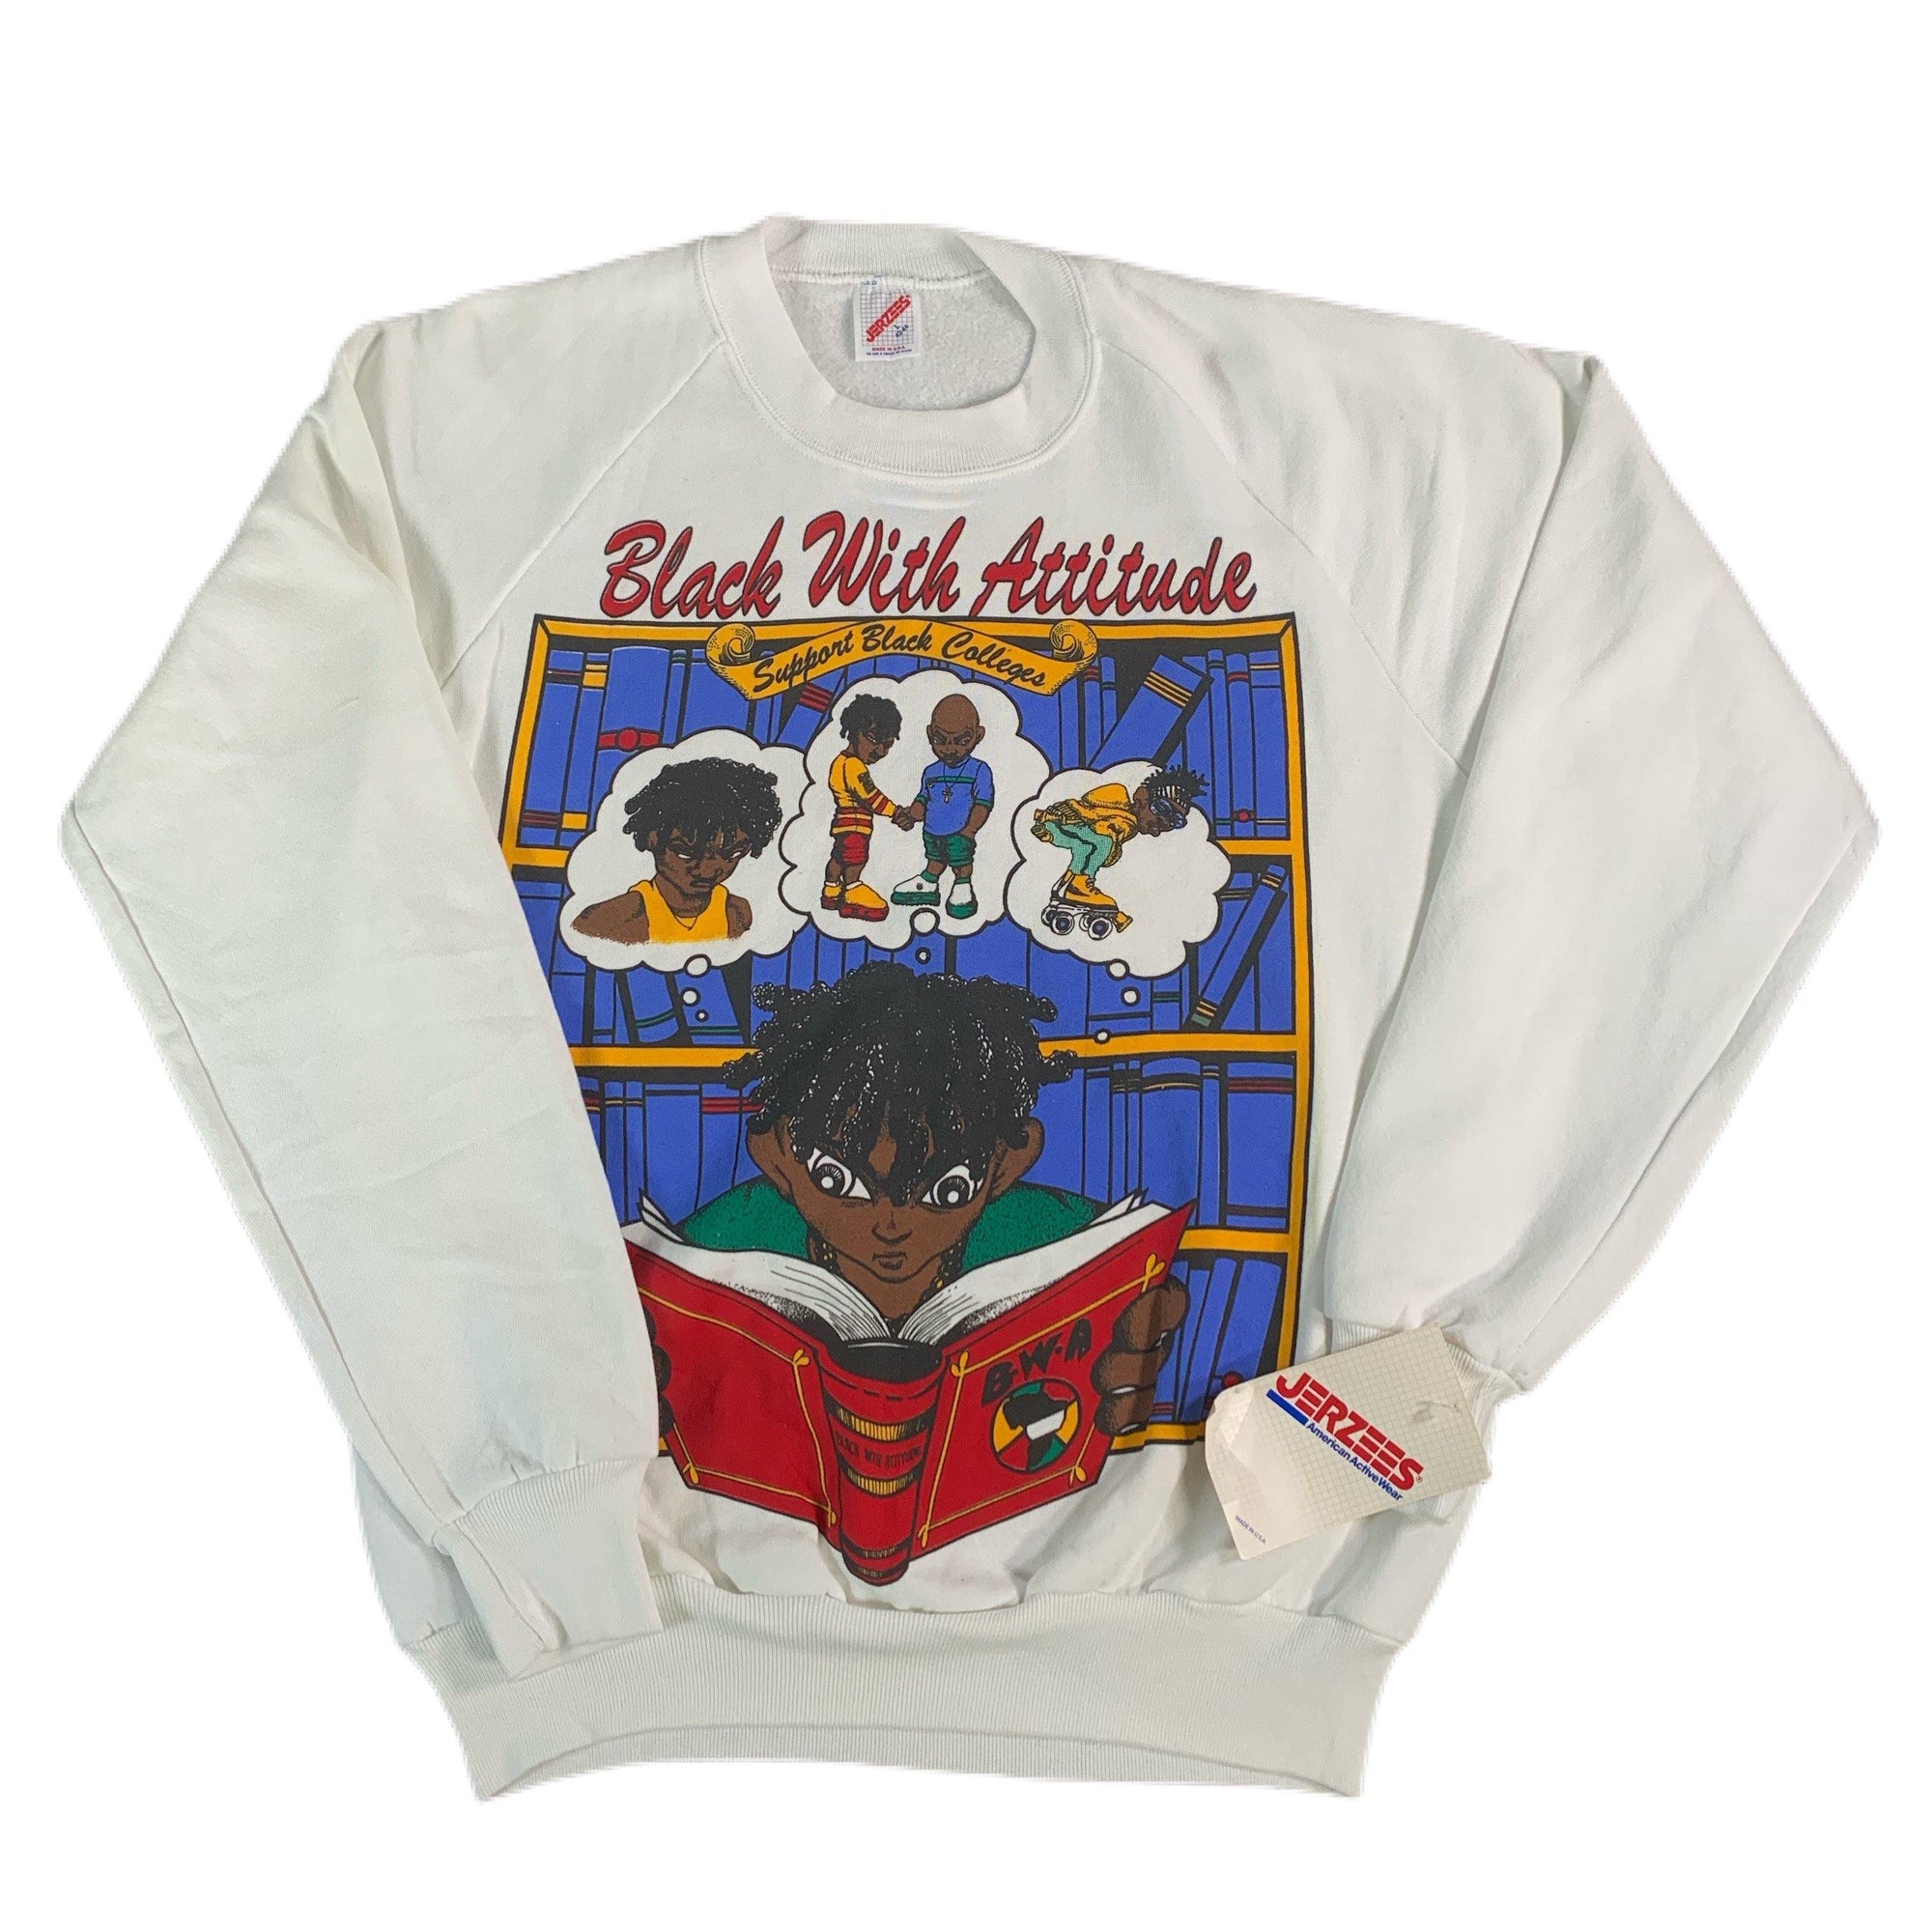 Vintage Black With Attitude "Support Black Colleges" Crewneck Sweatshirt - jointcustodydc